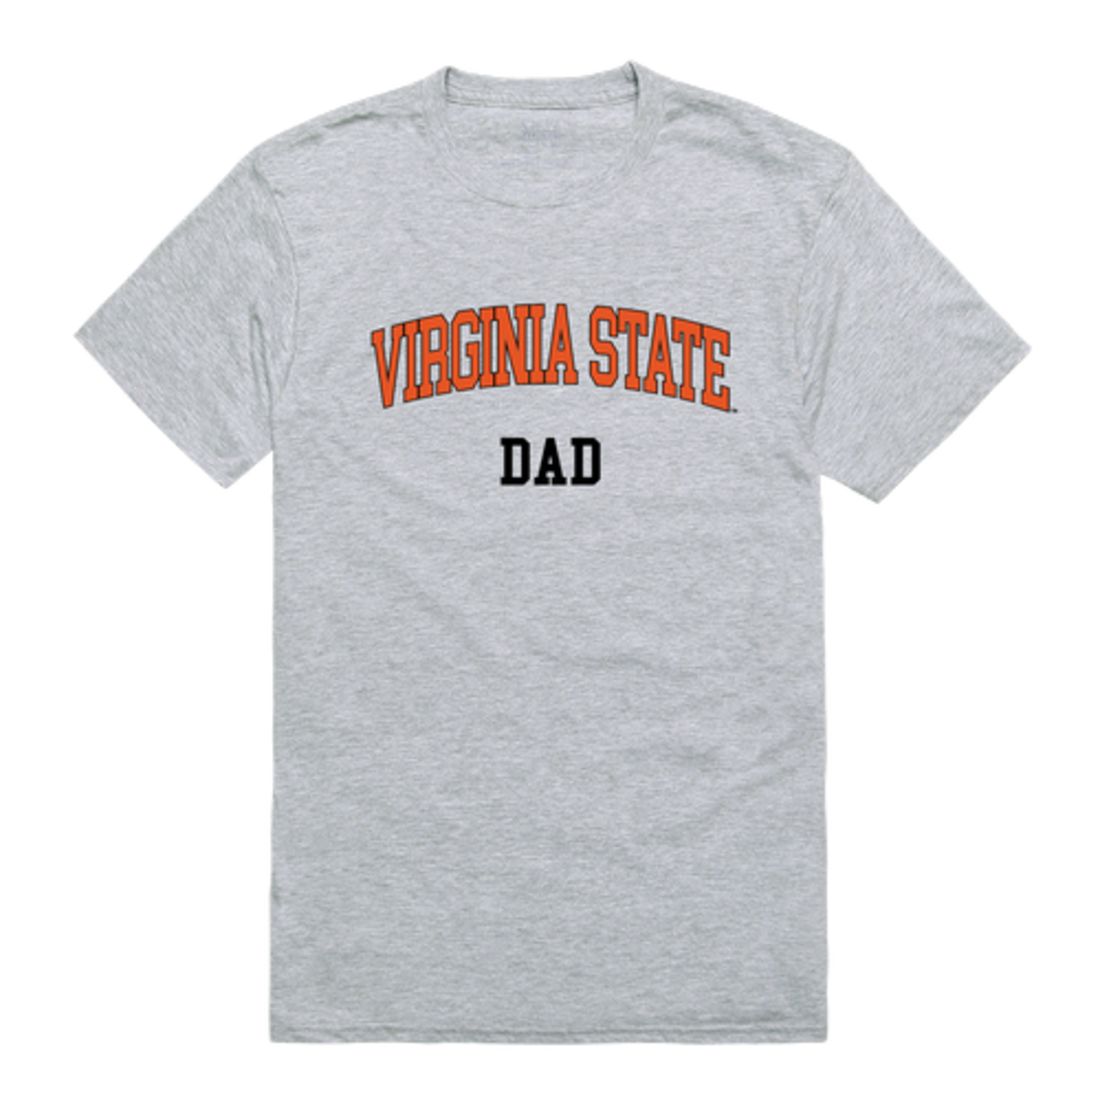 Virginia State University Trojans Dad T-Shirt